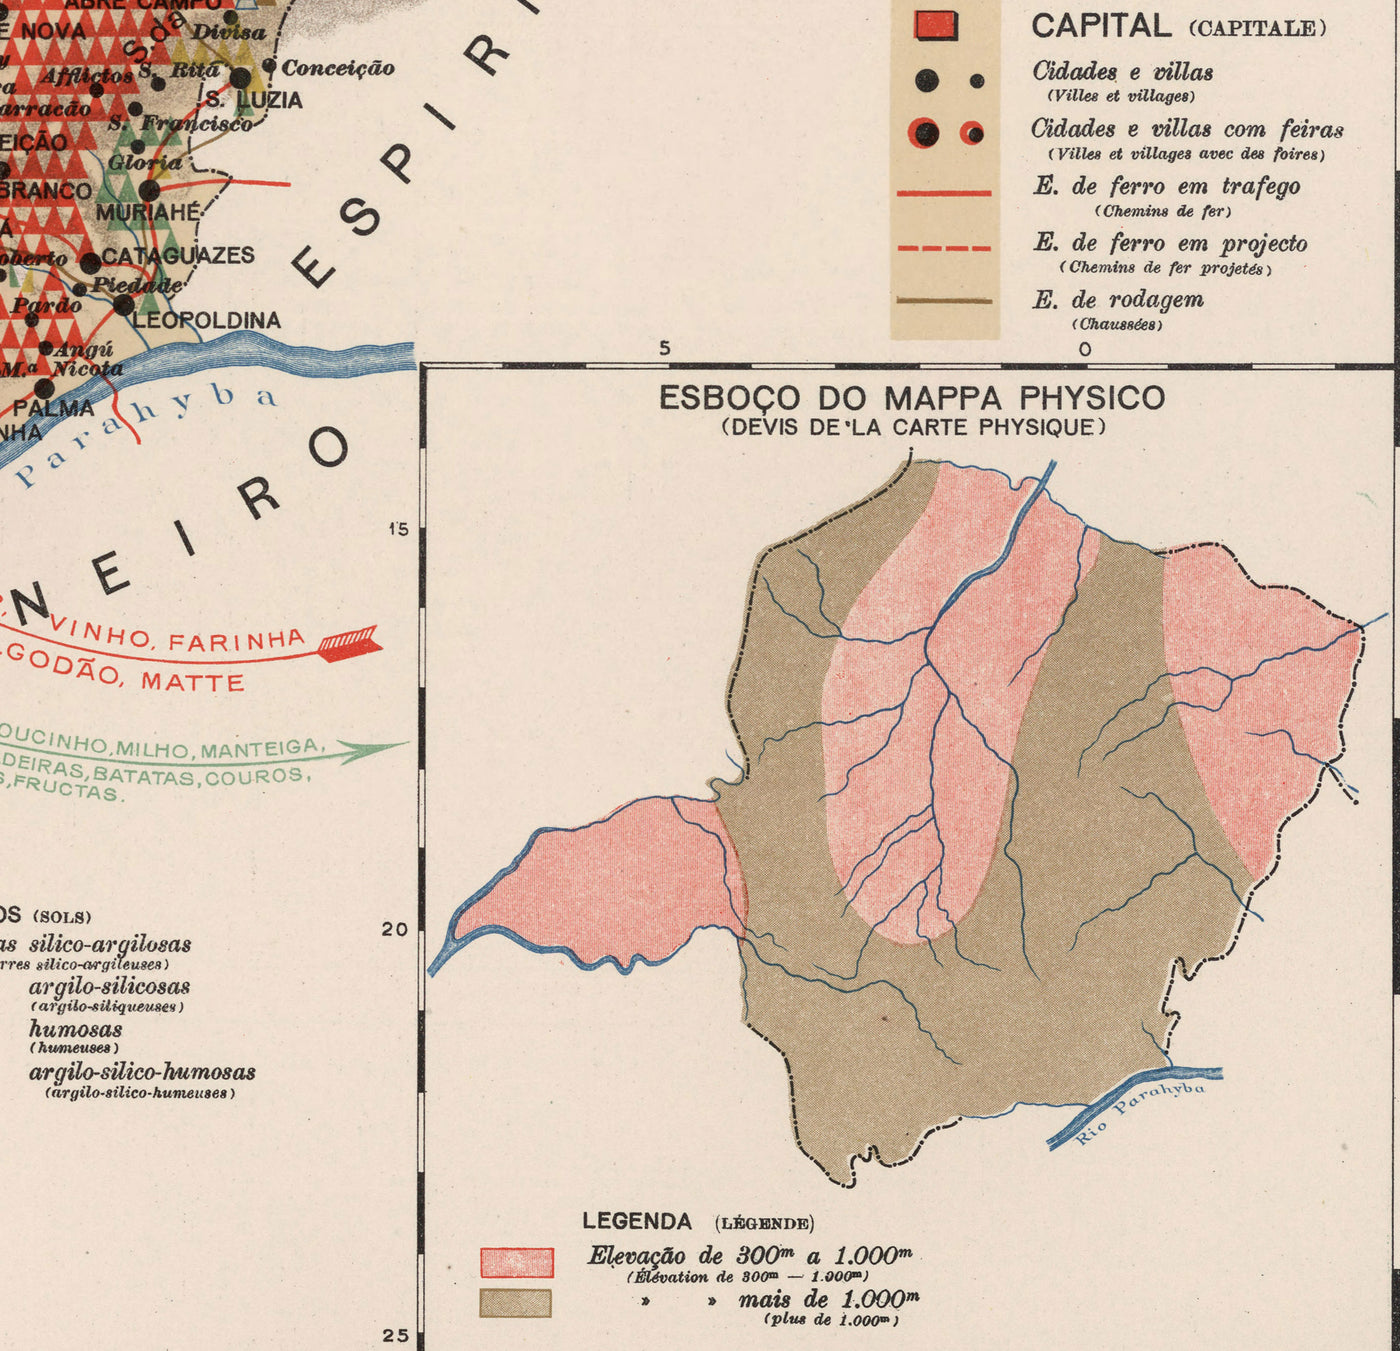 Old Map of Minas Gerais, Brazil in 1908 - Agriculture, Geology, Rocks, Soil - Belo Horizonte, Uberlandia, Uberaba, Juiz de Fora, Curvelo